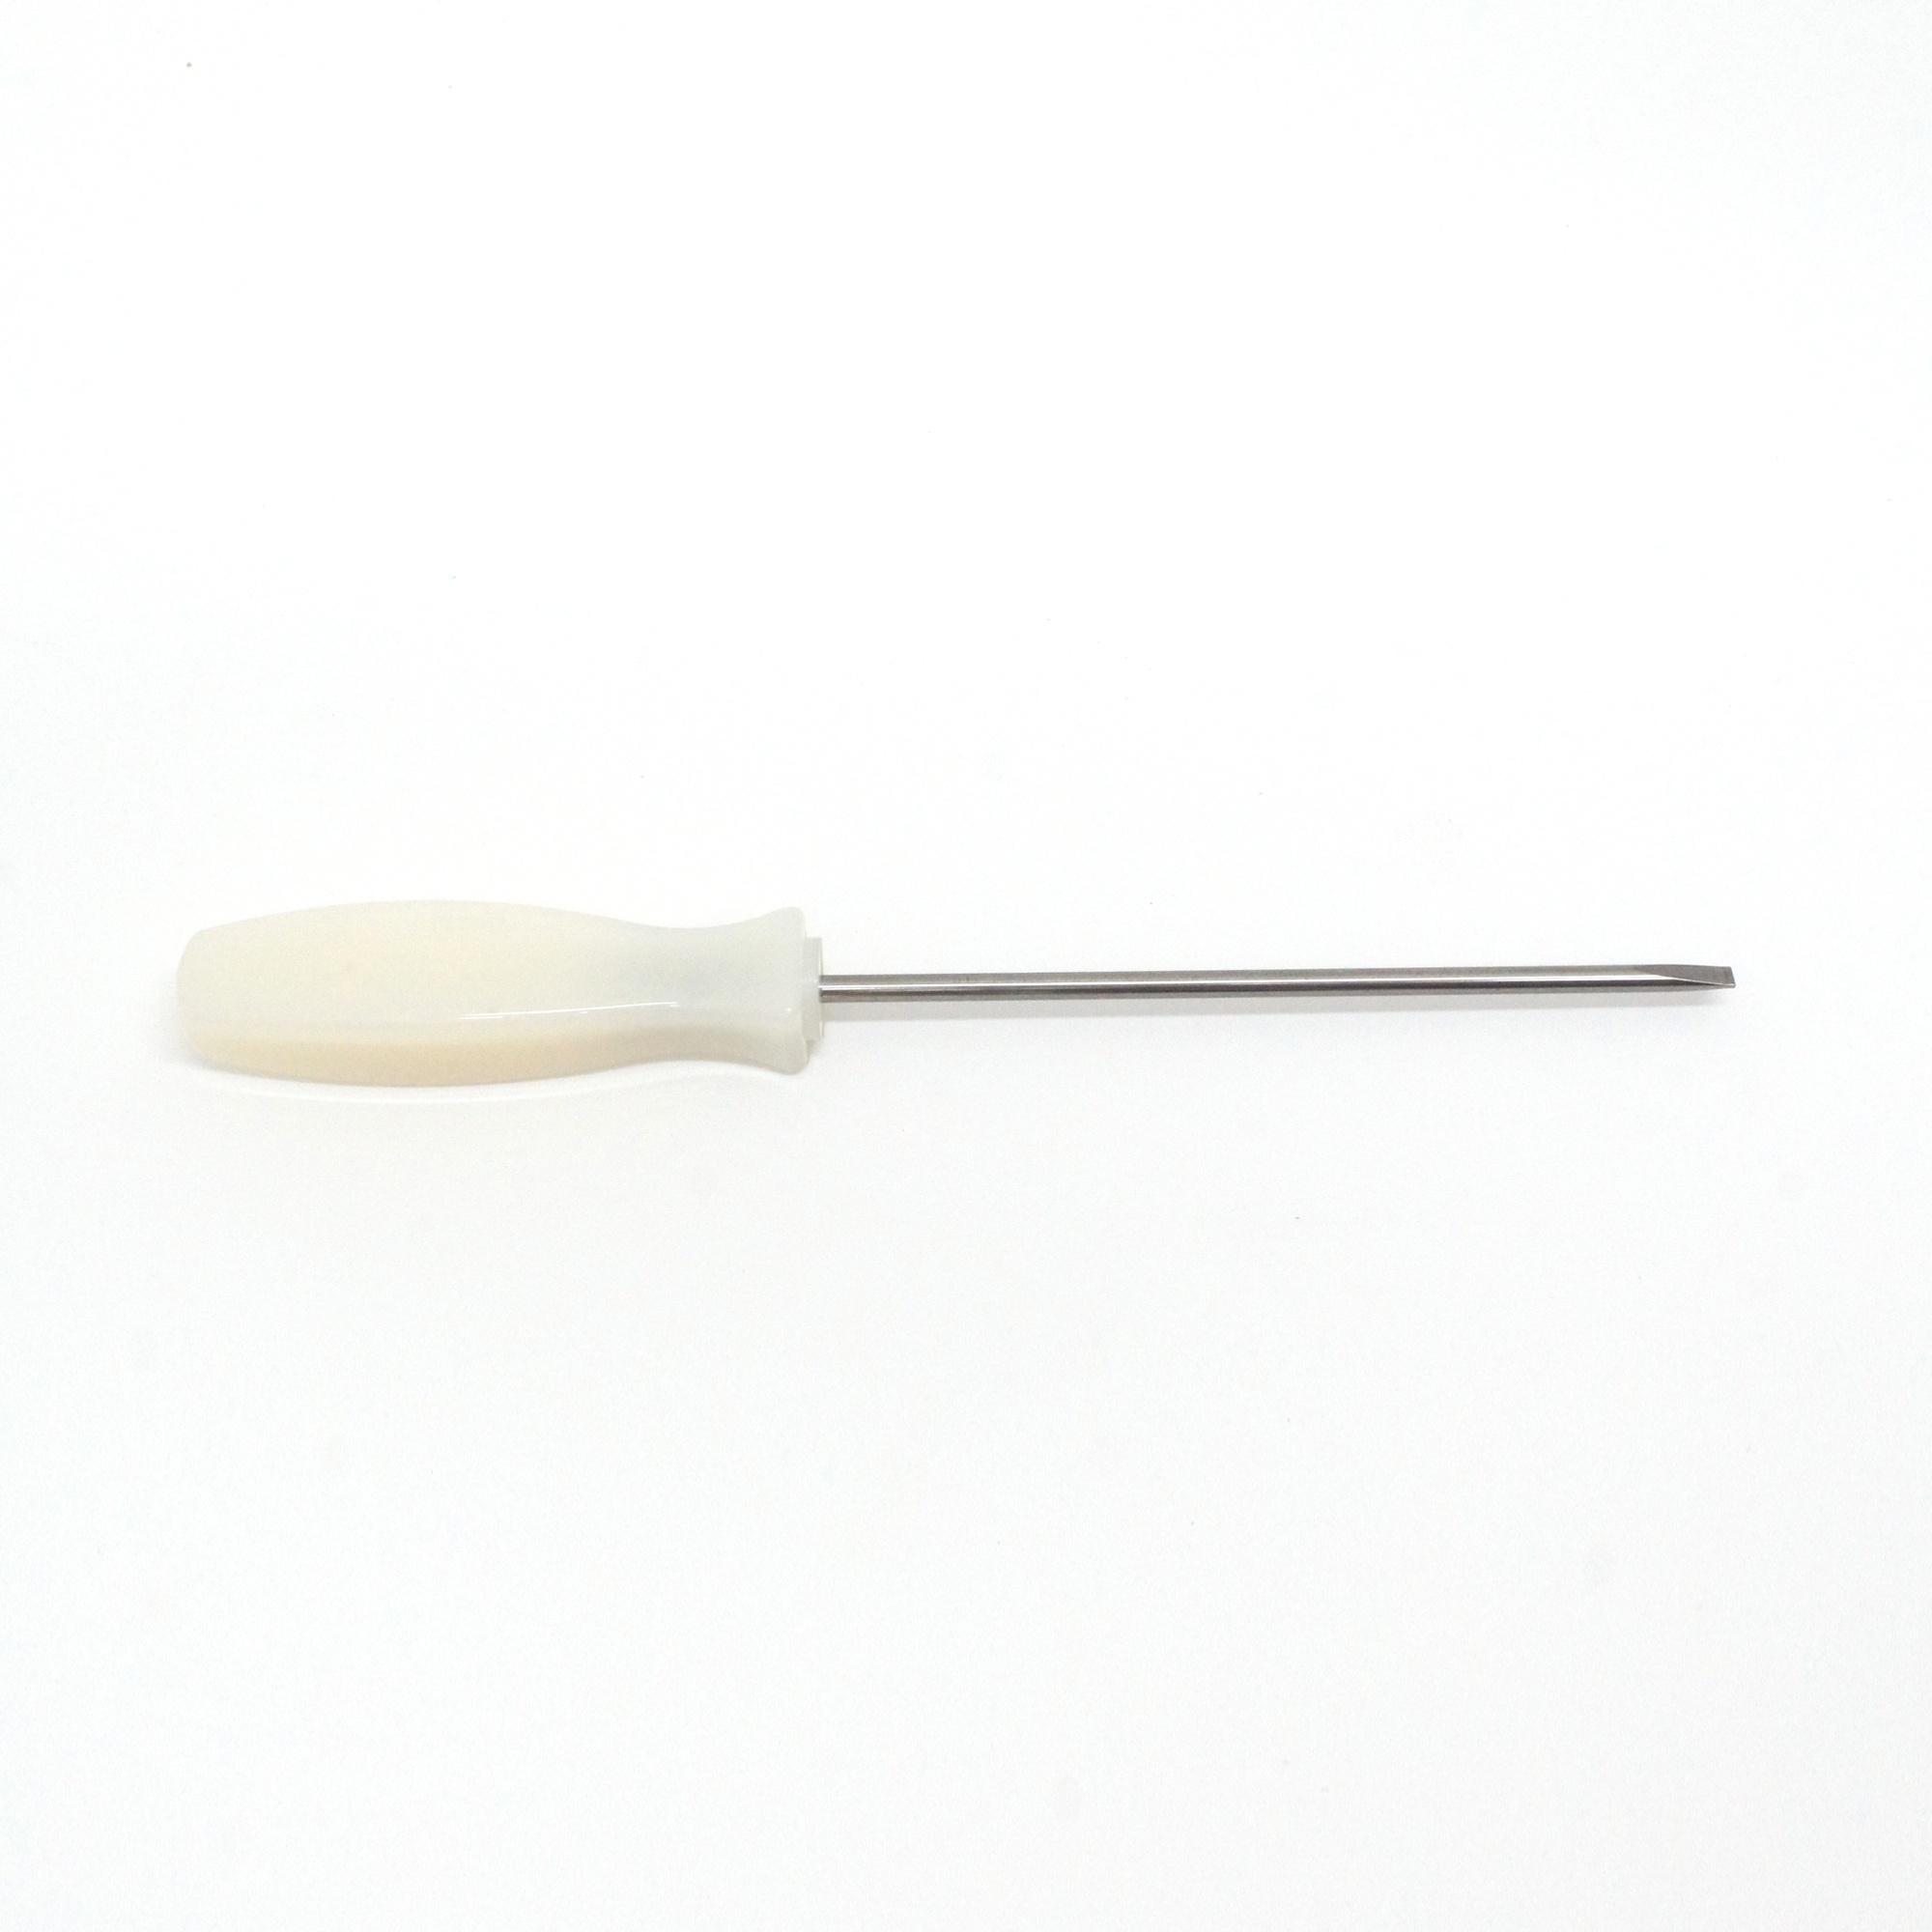 Parallel tip screwdrivers Image